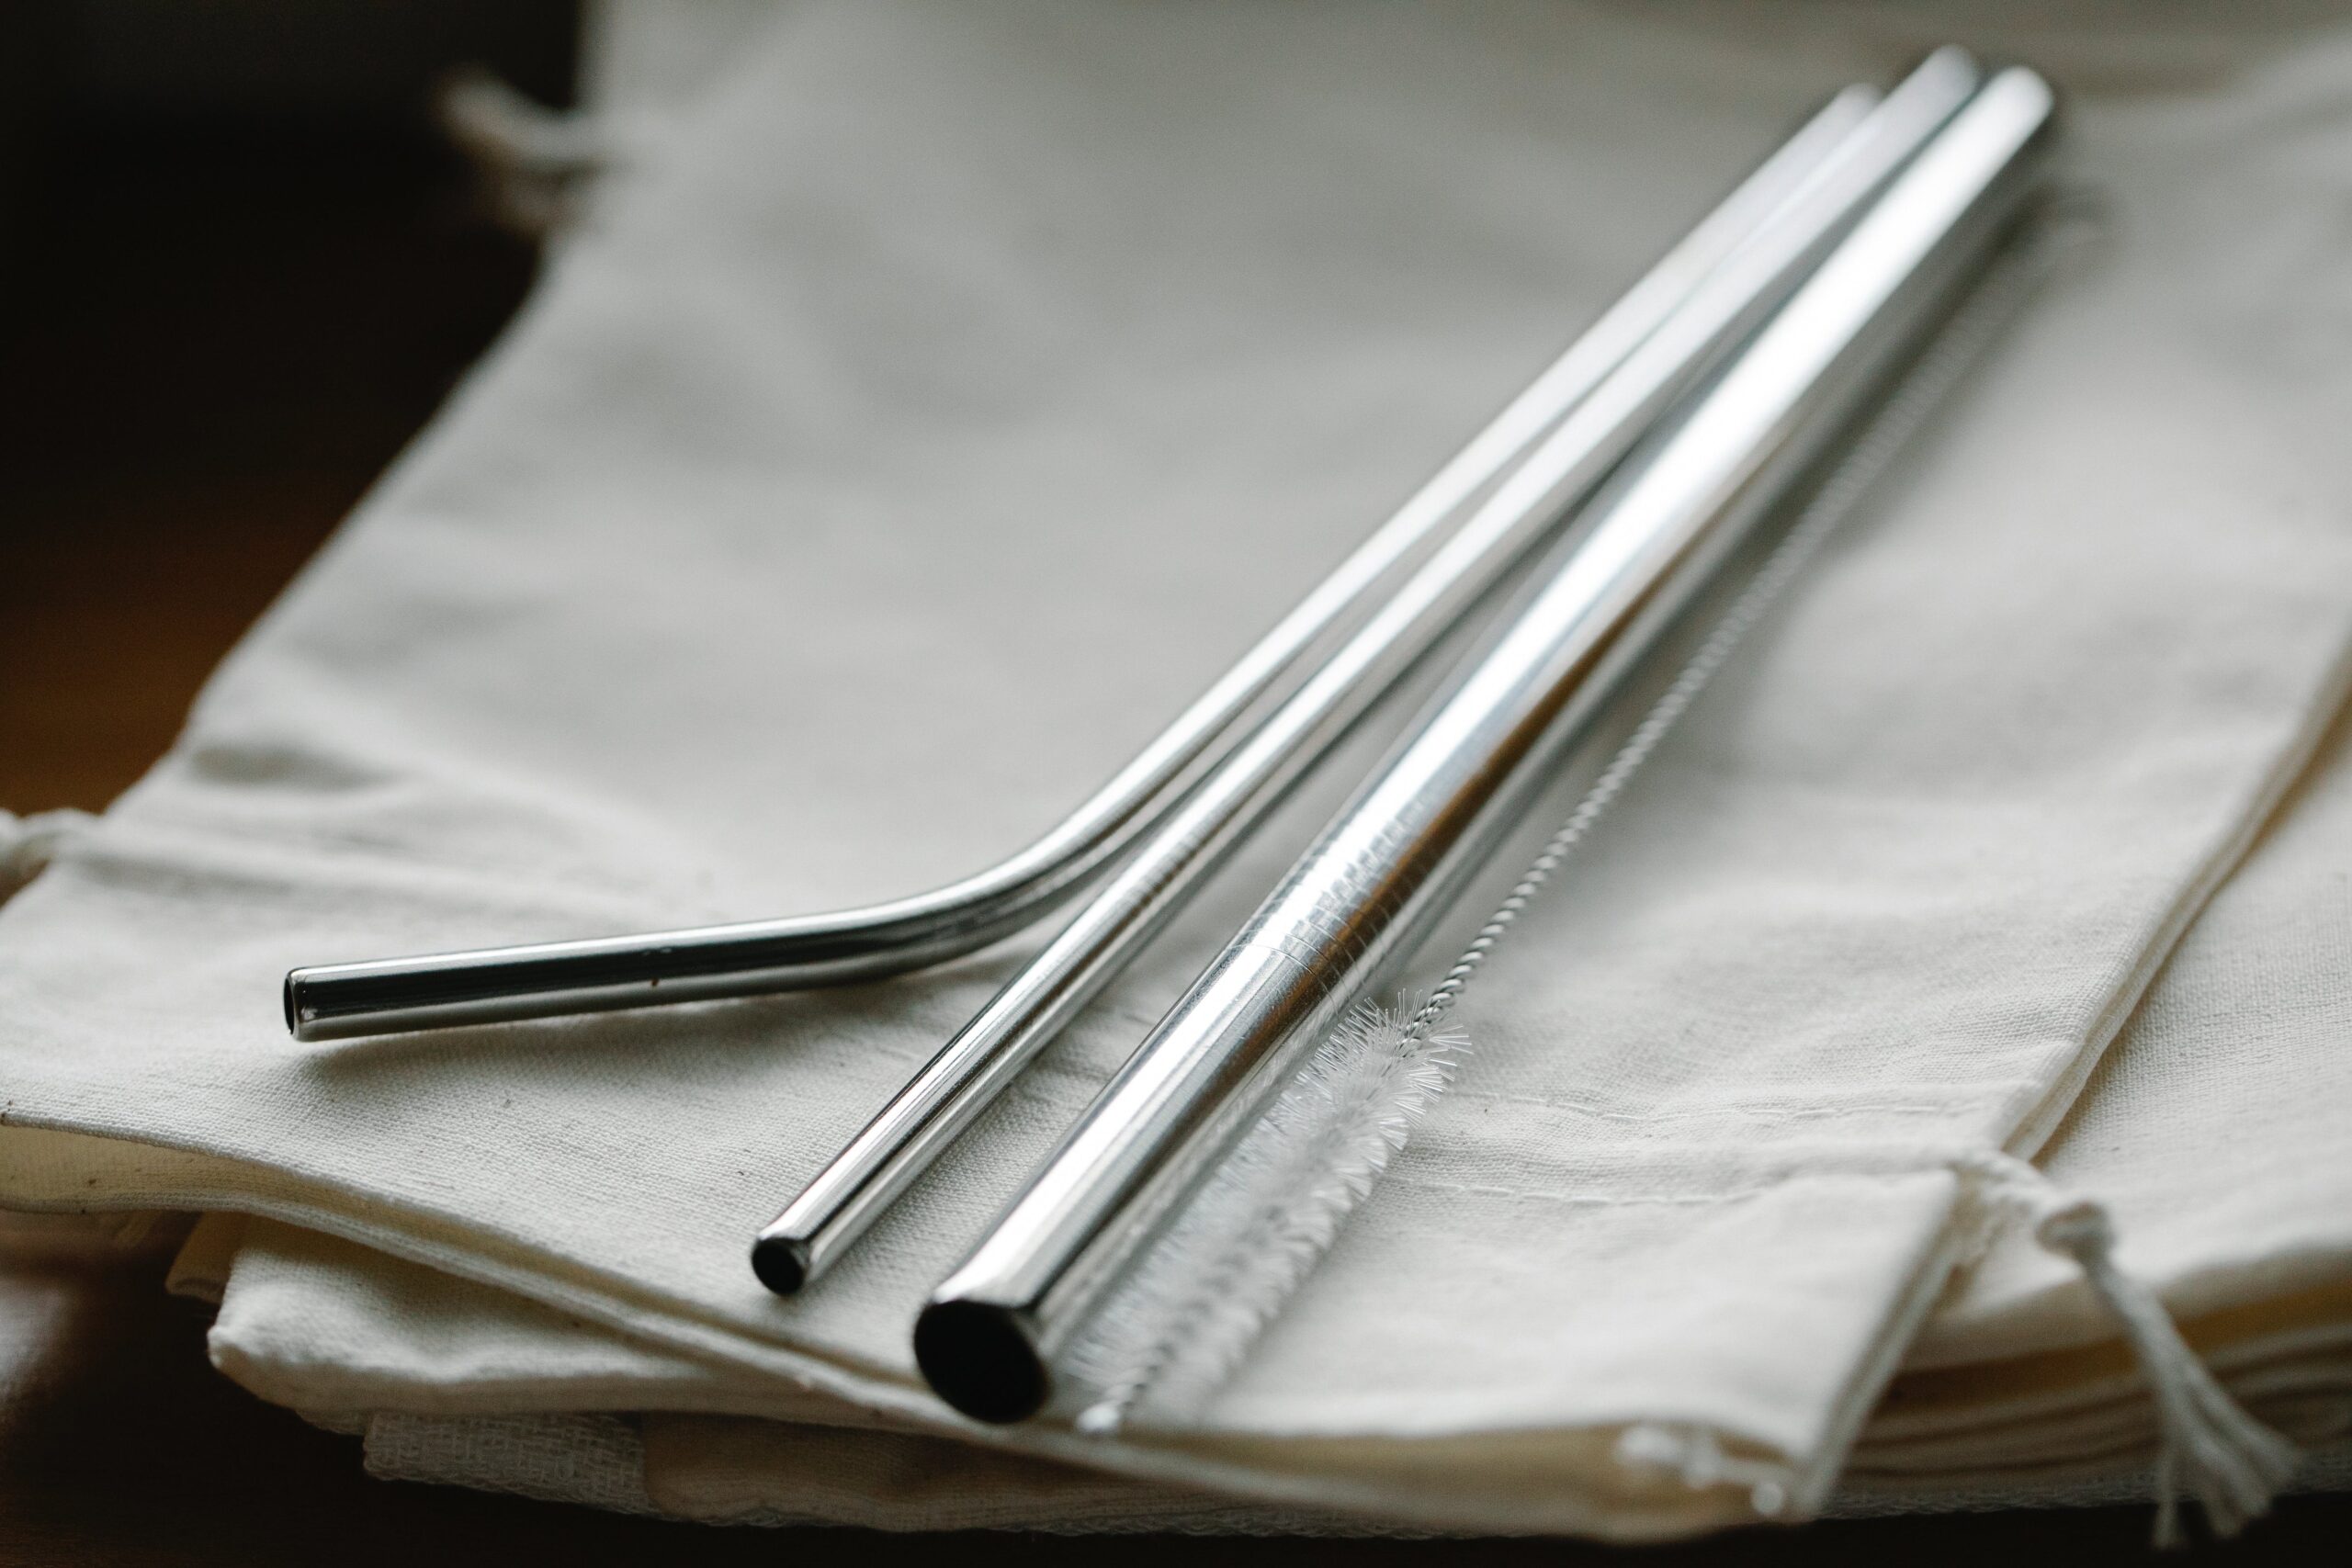 Reusable straws provide a sturdy alternative to paper straws.